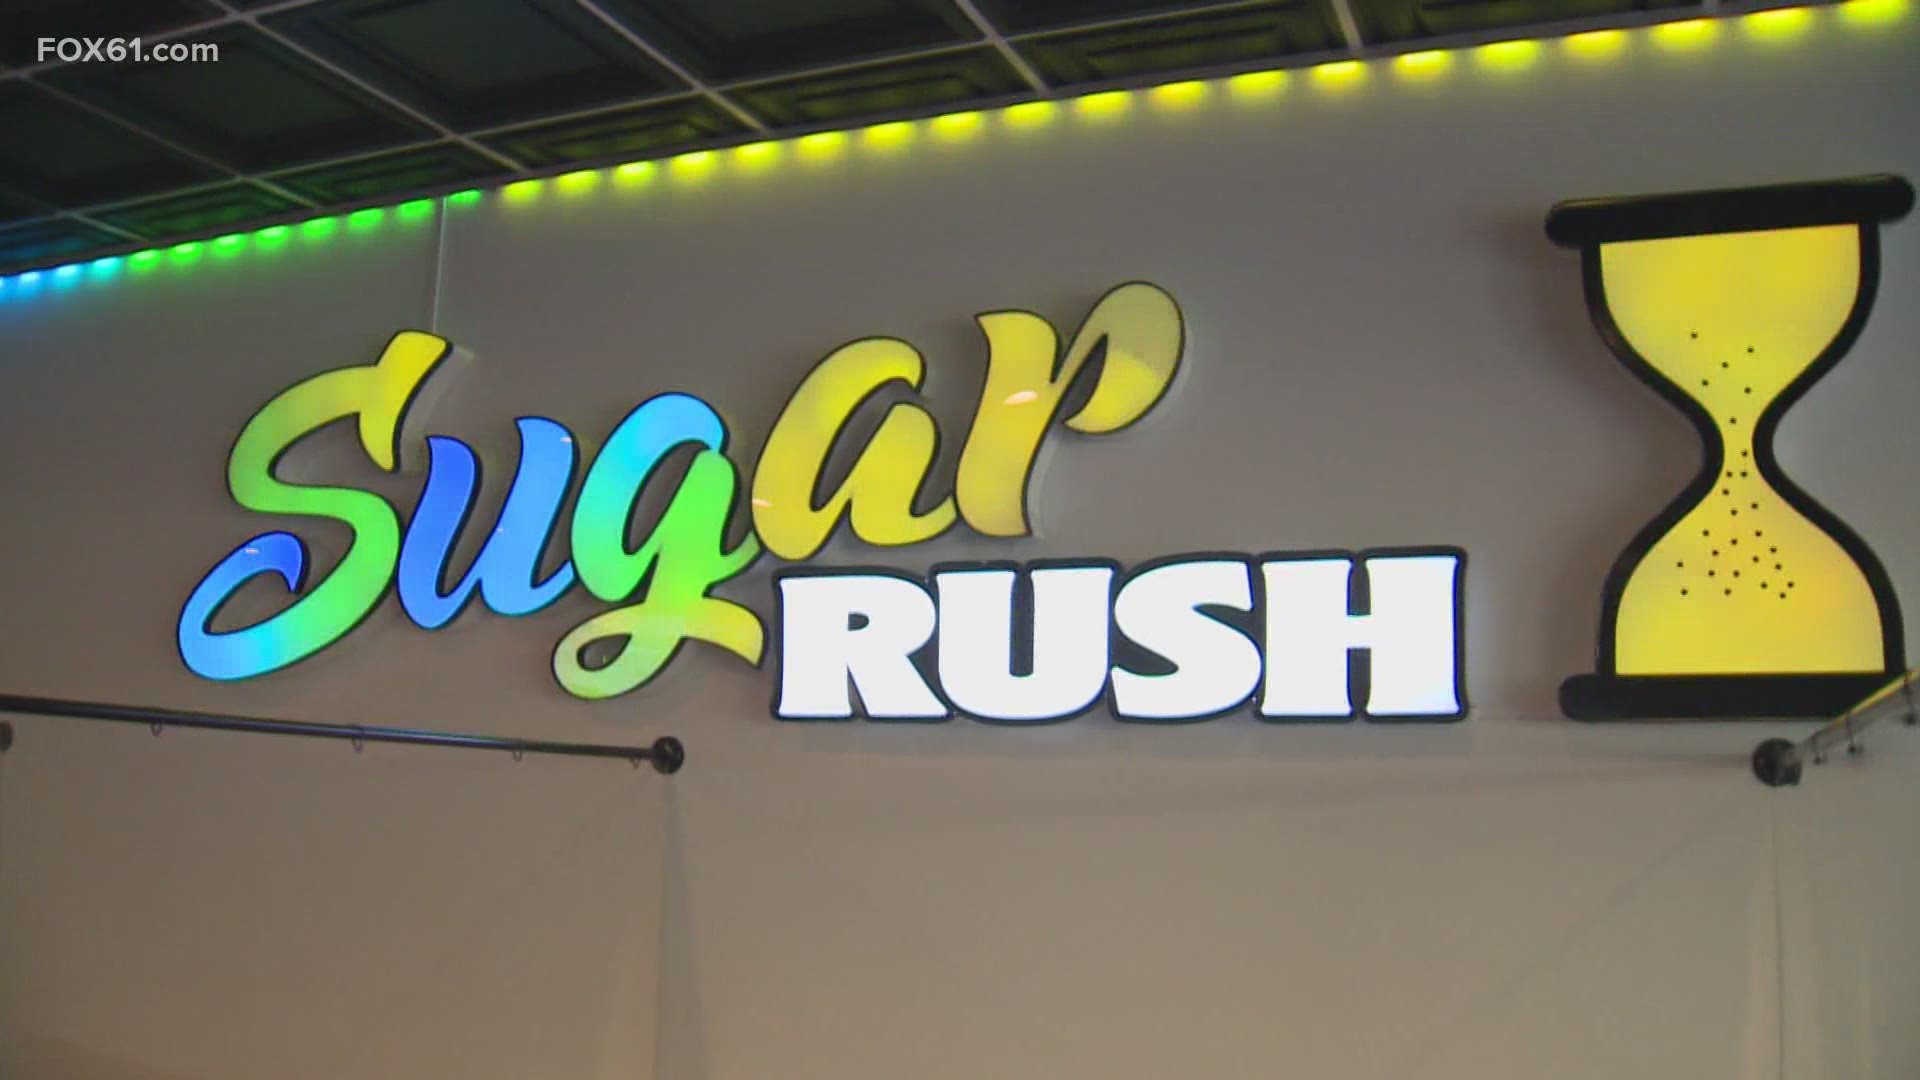 FOX61's Sean Pragano learns how tasty the sweets at a liquid nitrogen ice cream shop can be.